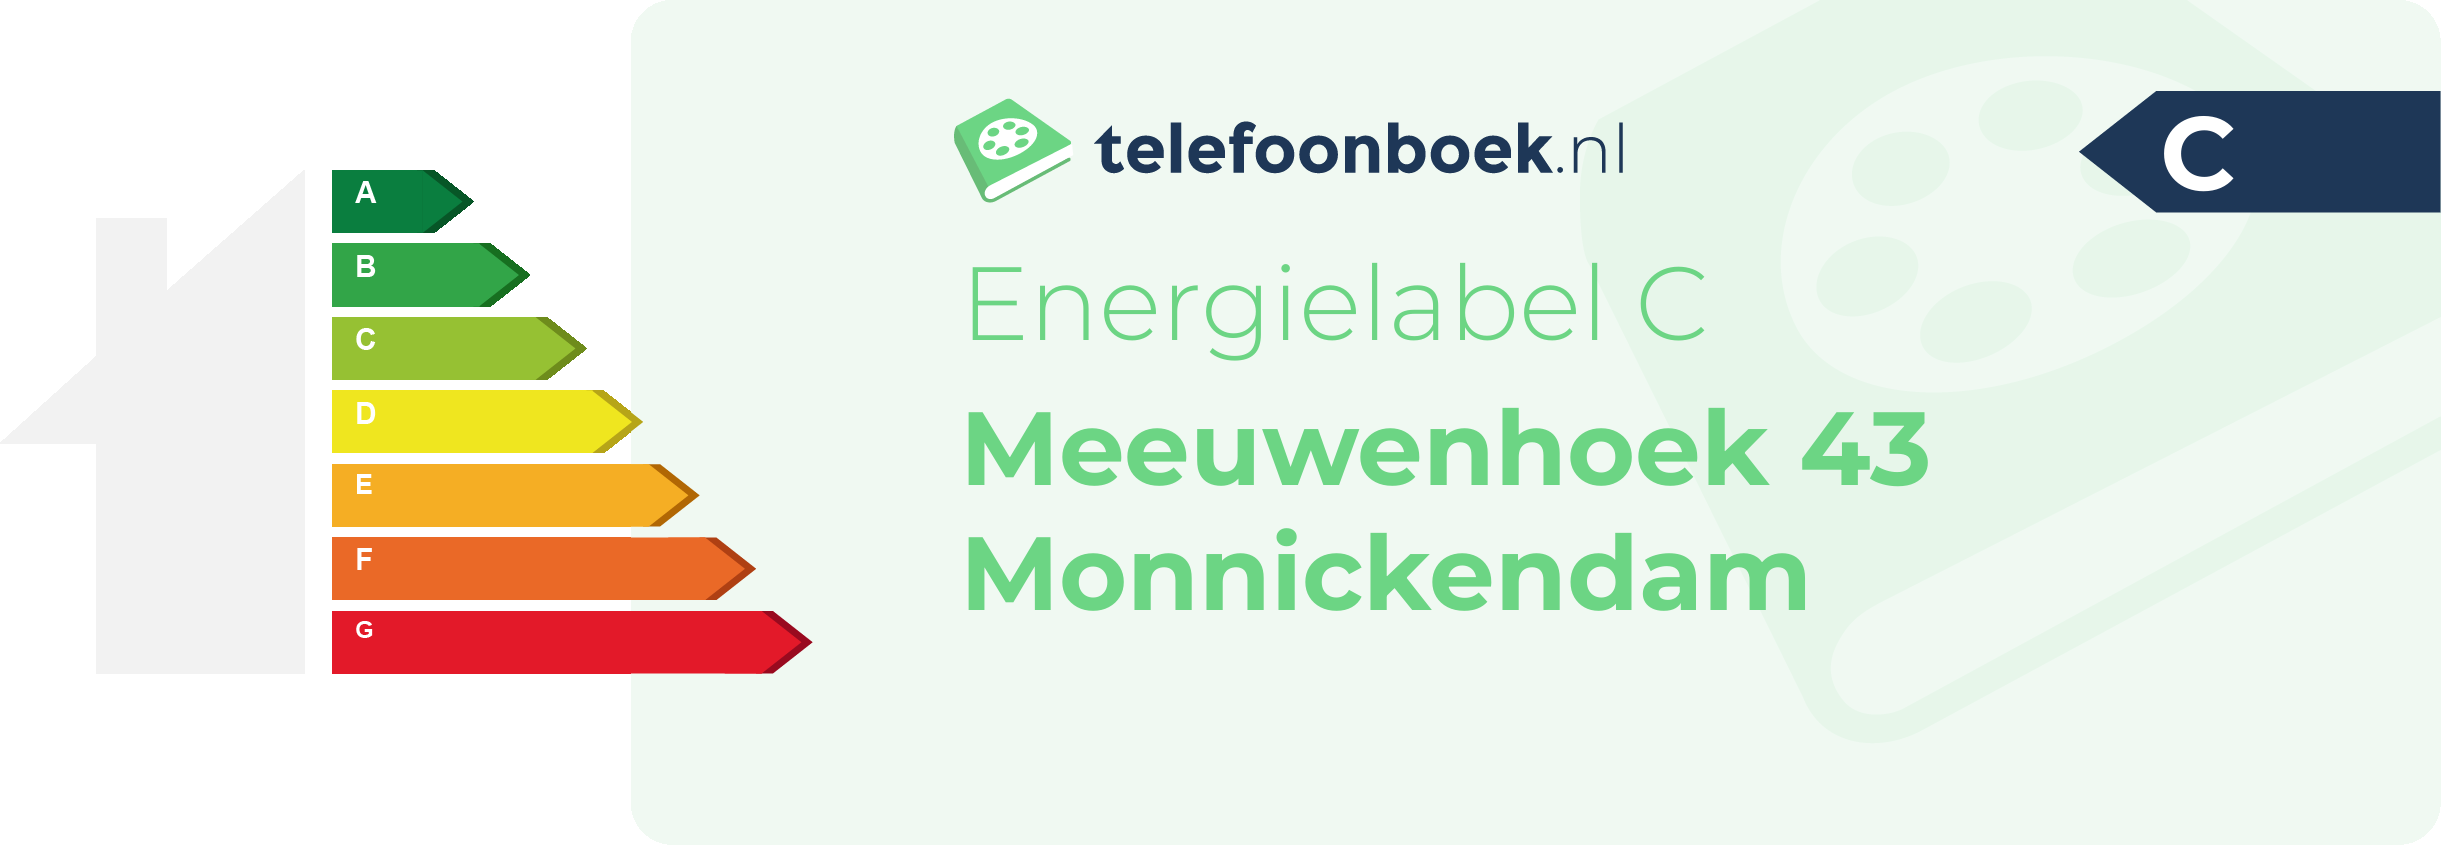 Energielabel Meeuwenhoek 43 Monnickendam